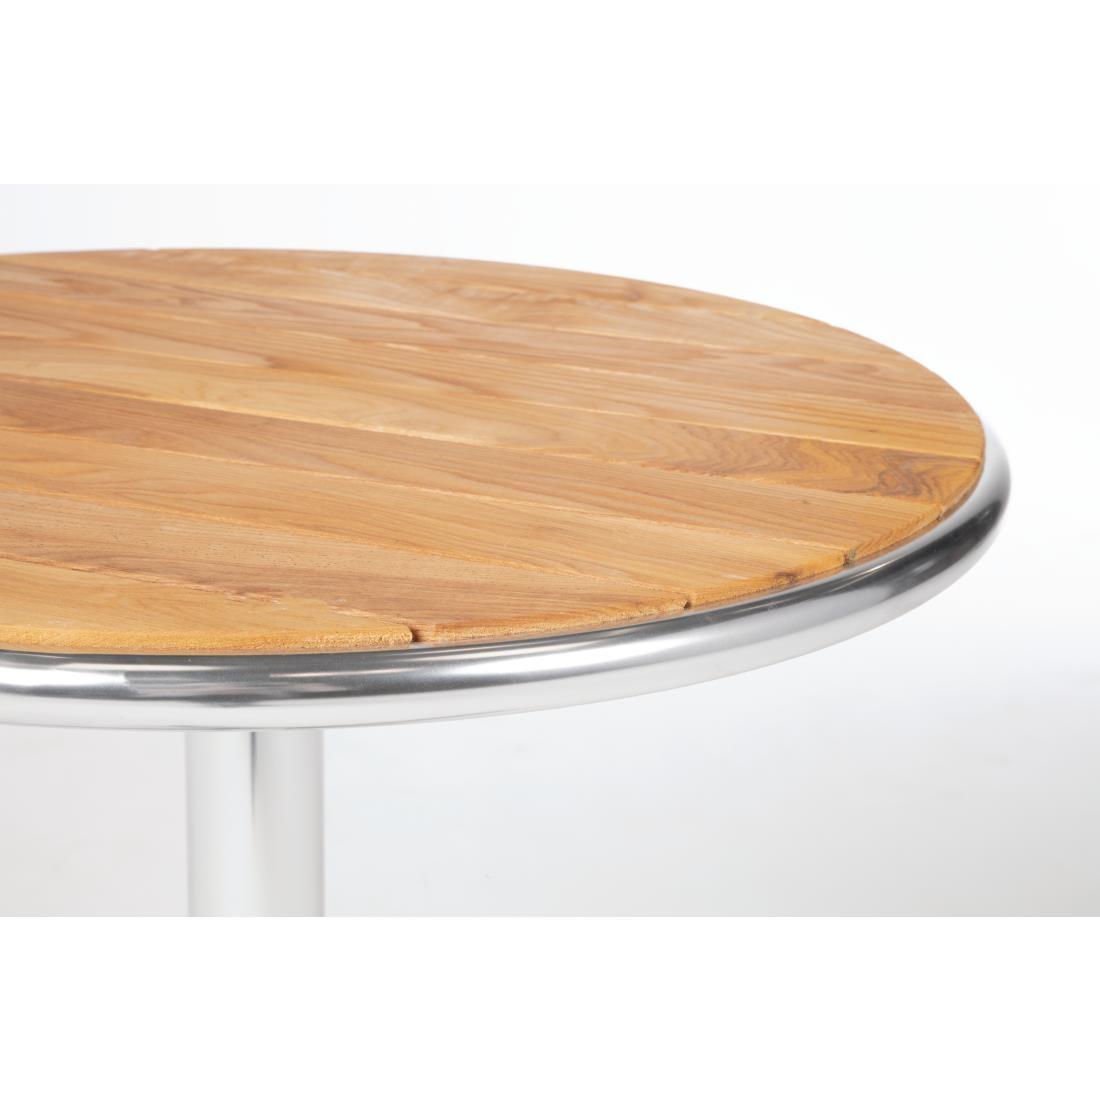 Bolero Ash Top Table Round 600mm - U428  - 3